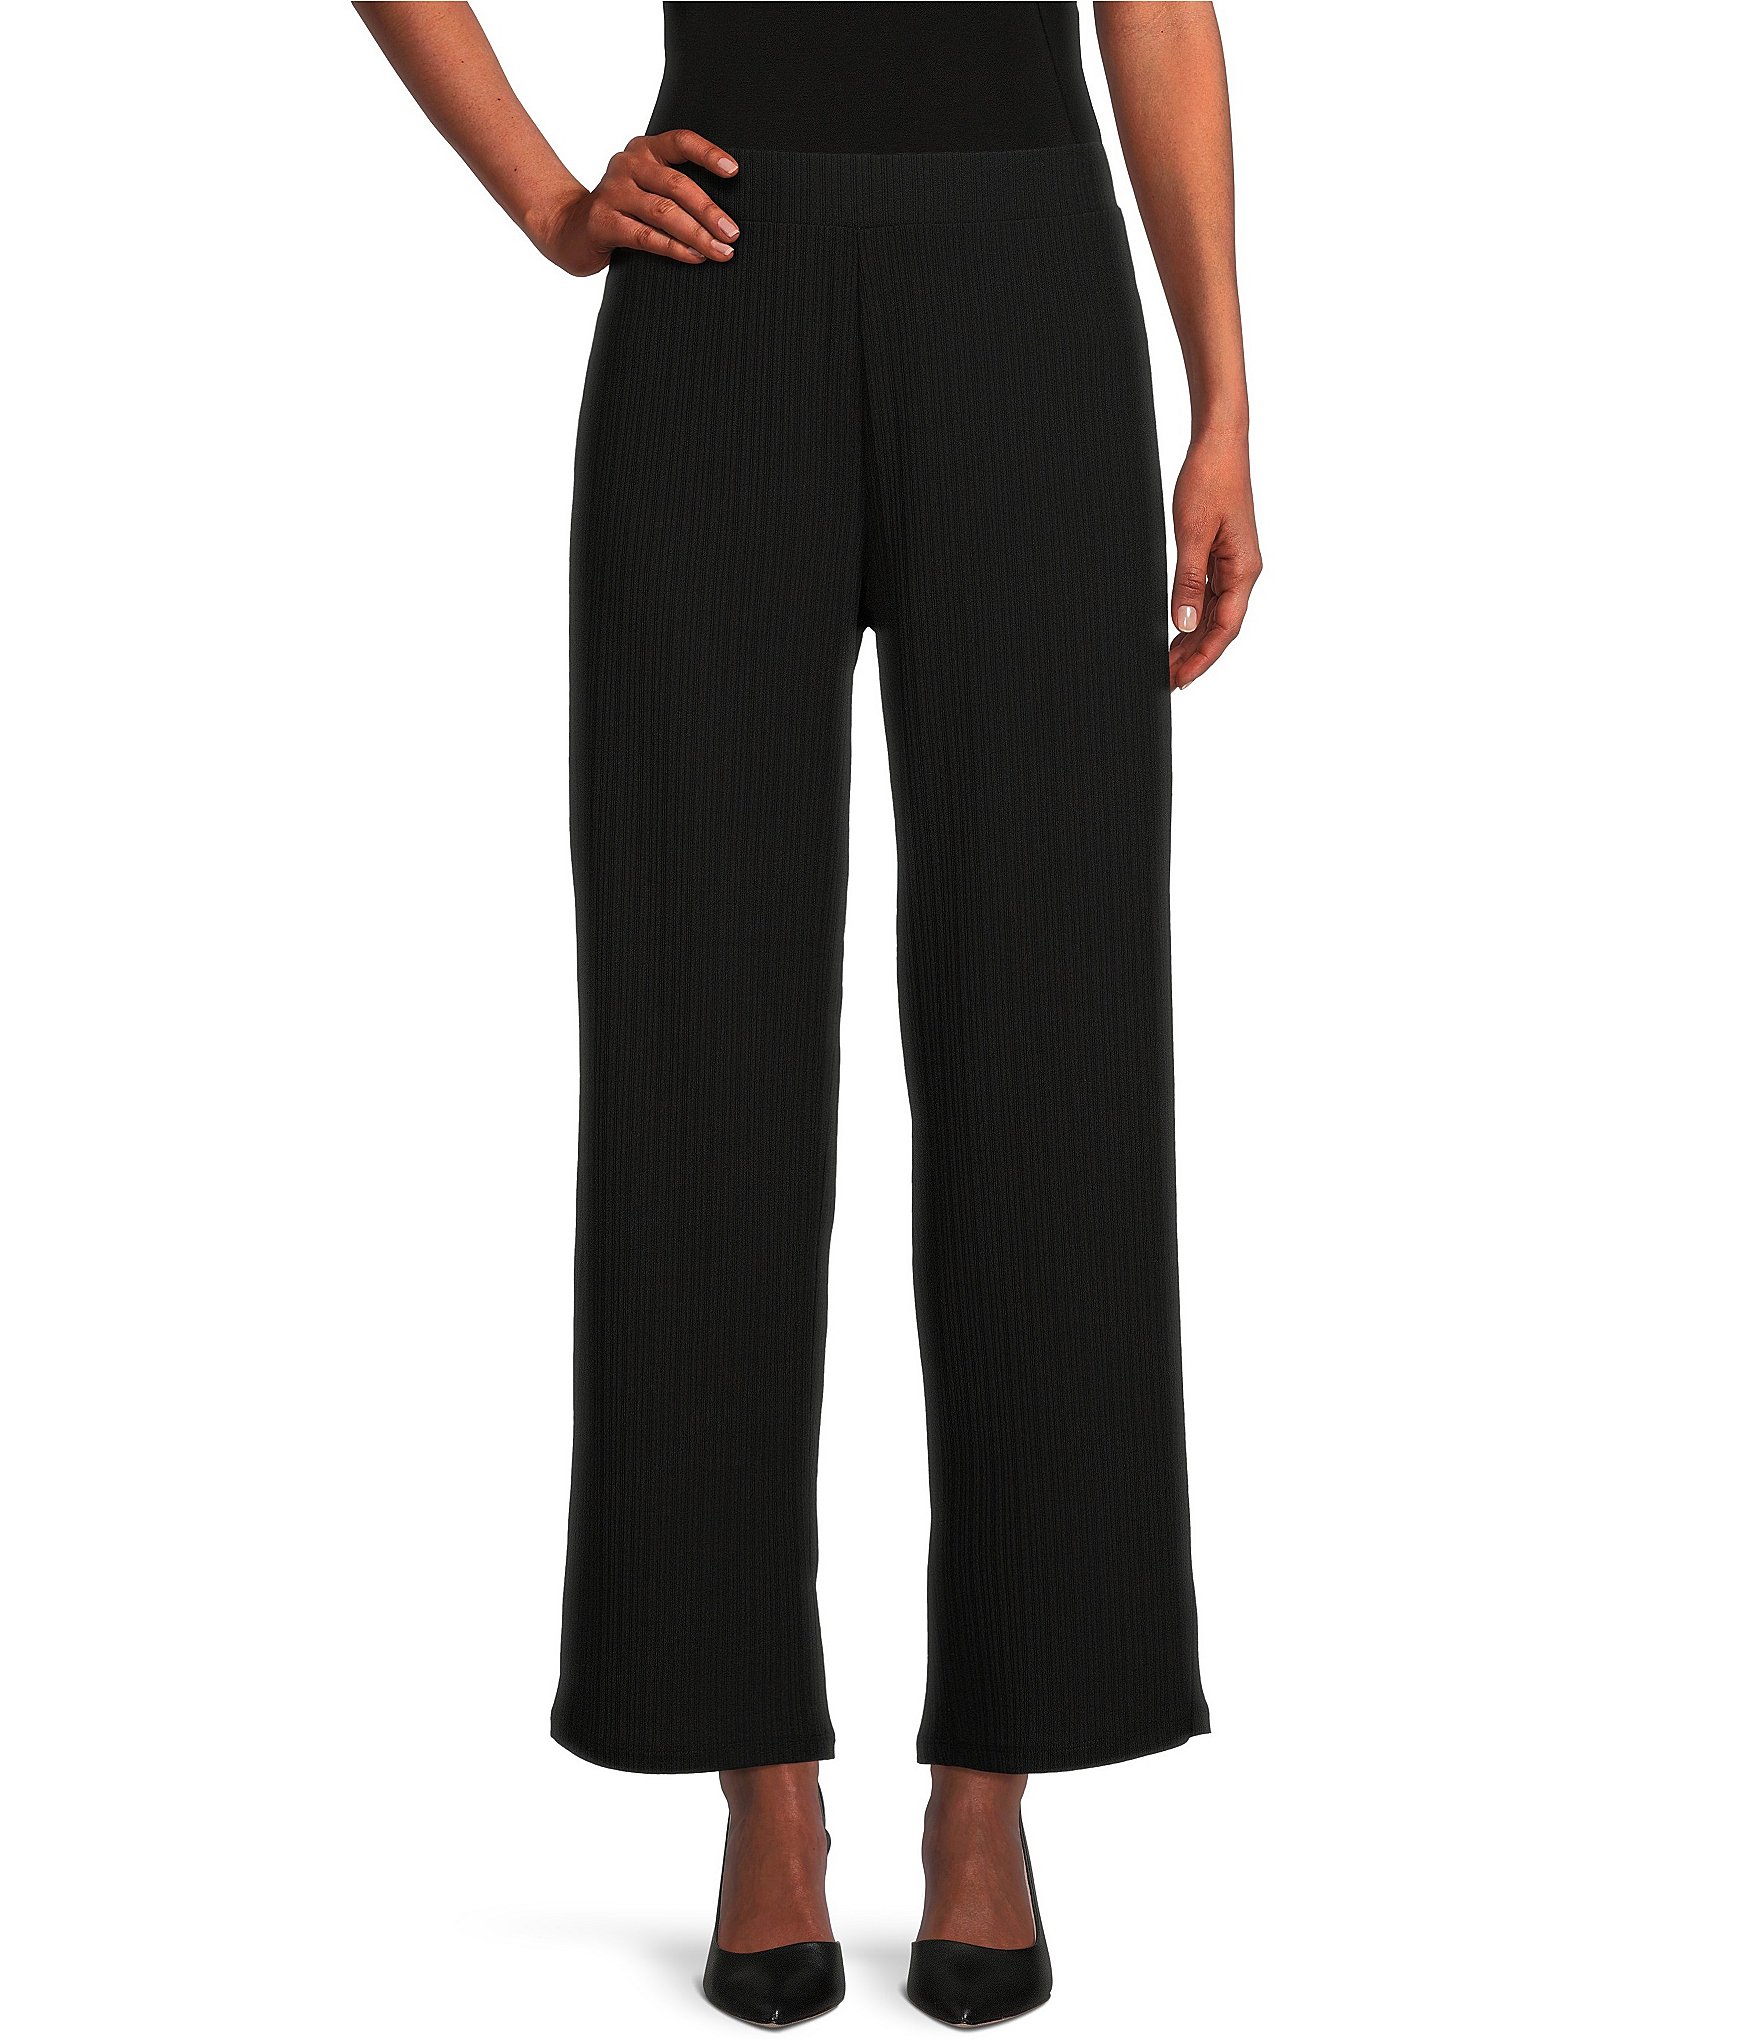 NWT Nygard Slims Pull On Stretch Capri Pants Black Women's Size L 14-16  Petite in 2024